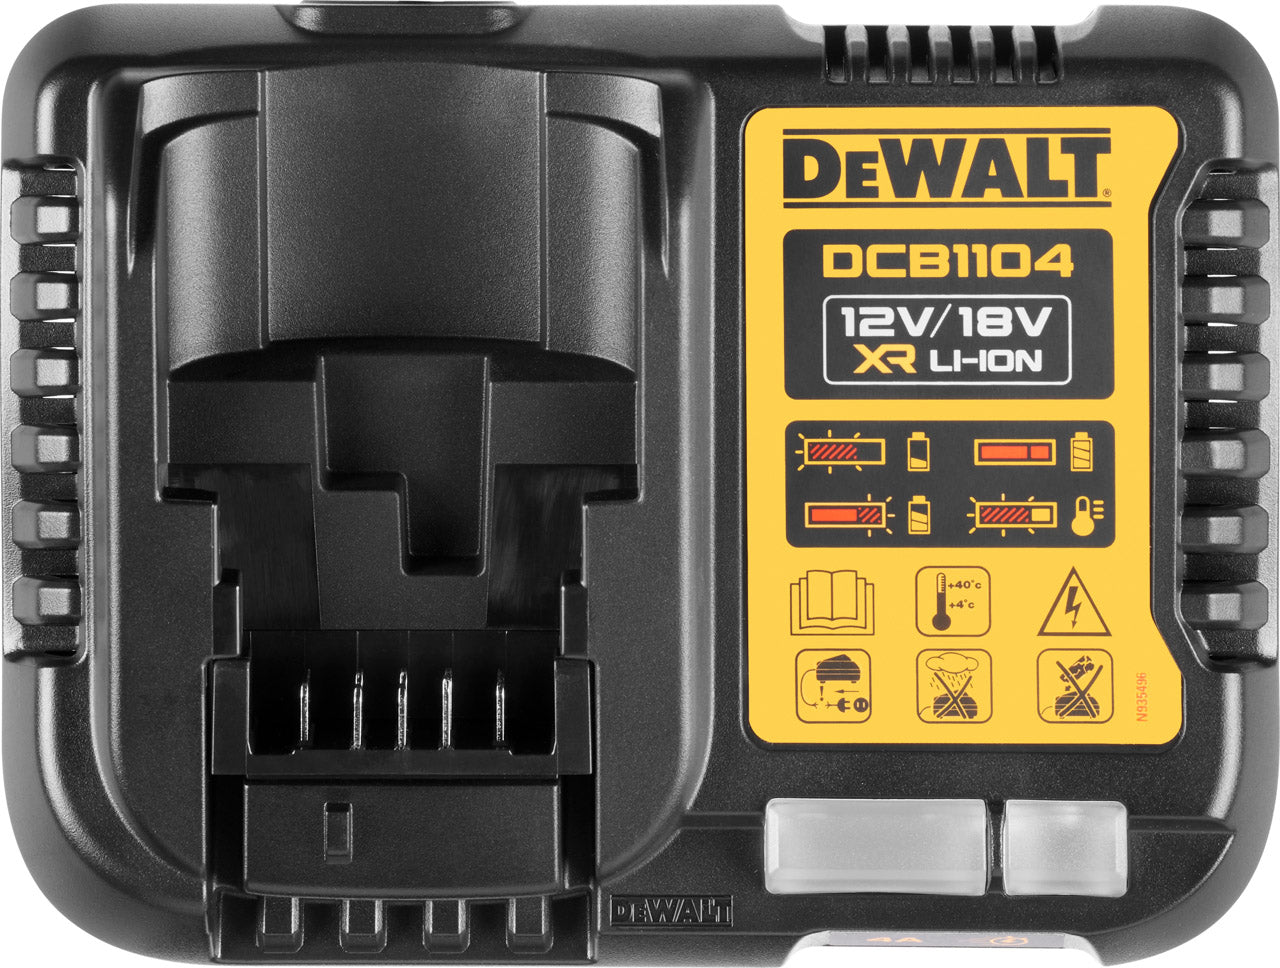 Dewalt 18v + XR Multi Charger DCB1104-QW Power Tool Services